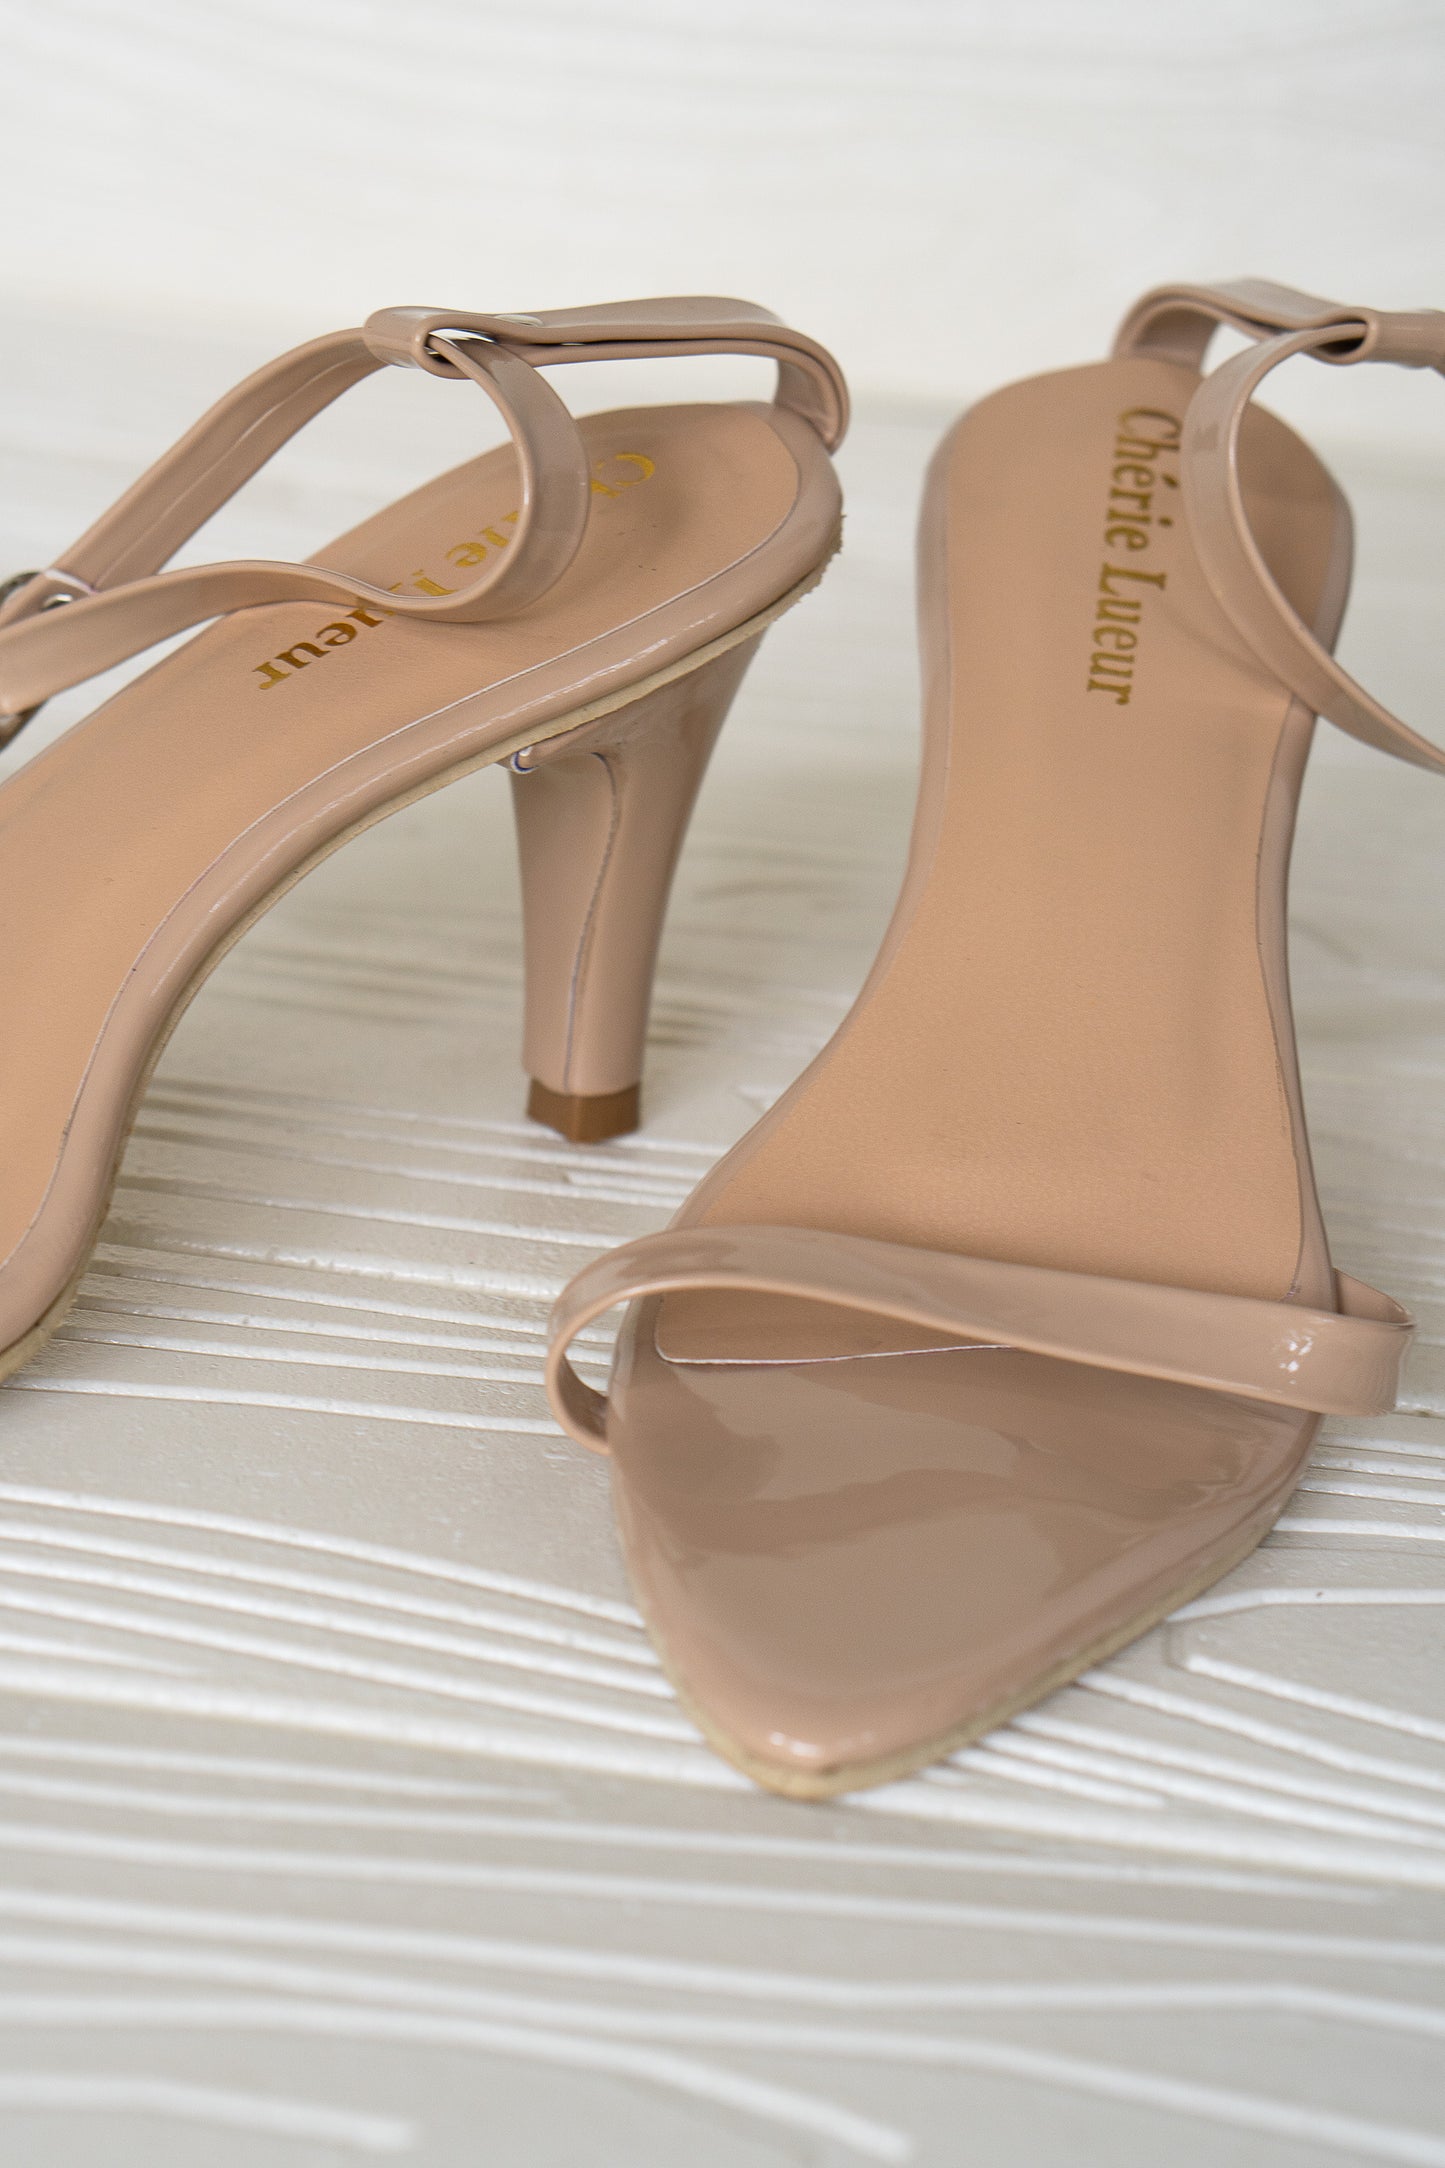 Elegant nude heel boasting a 3-inch height